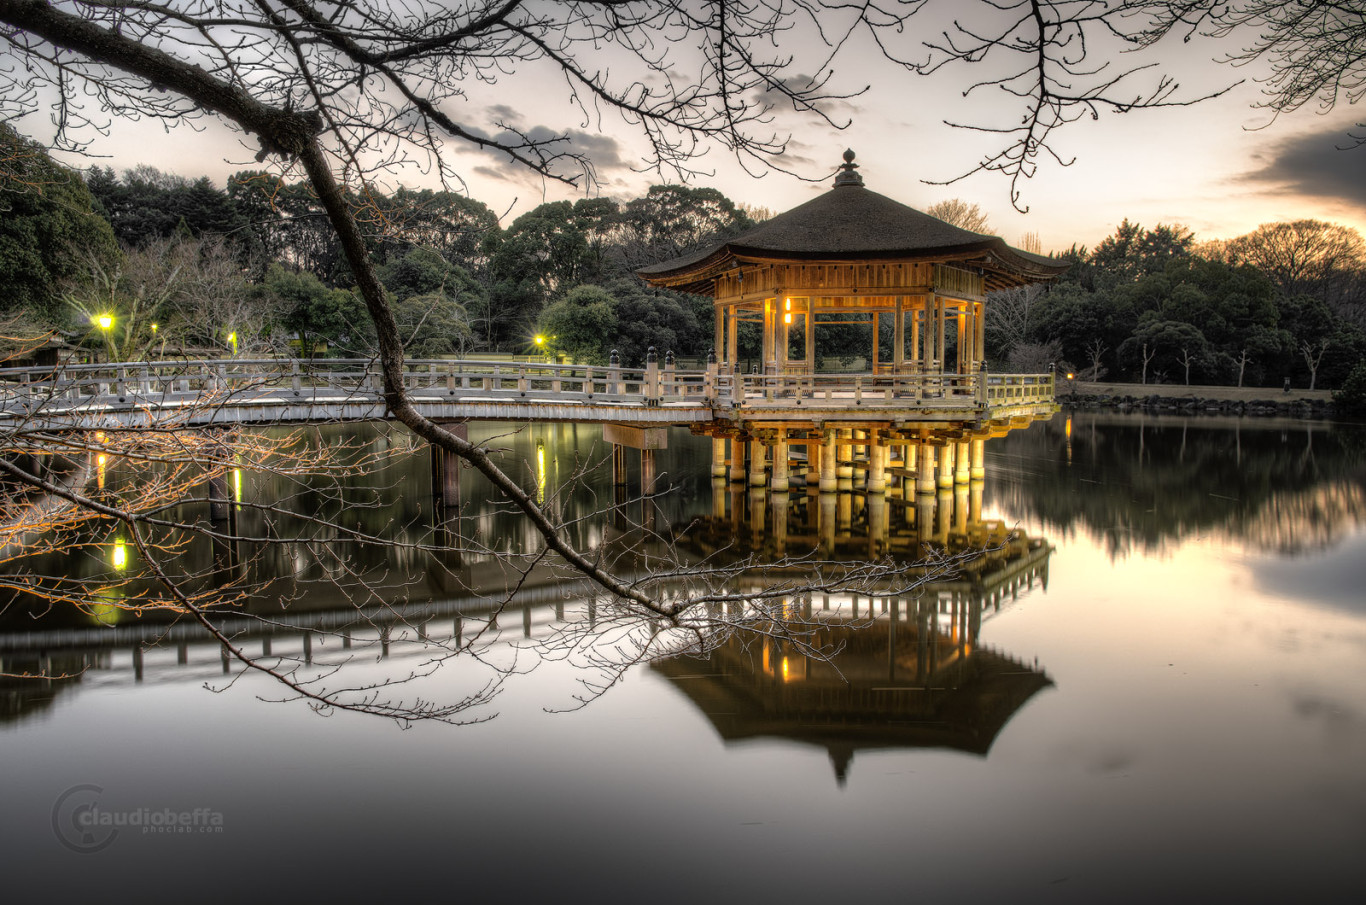 Floating Pavilion Lake Reflection Bridge Tree Sunset Nara Landscape HDR Japan Pentax